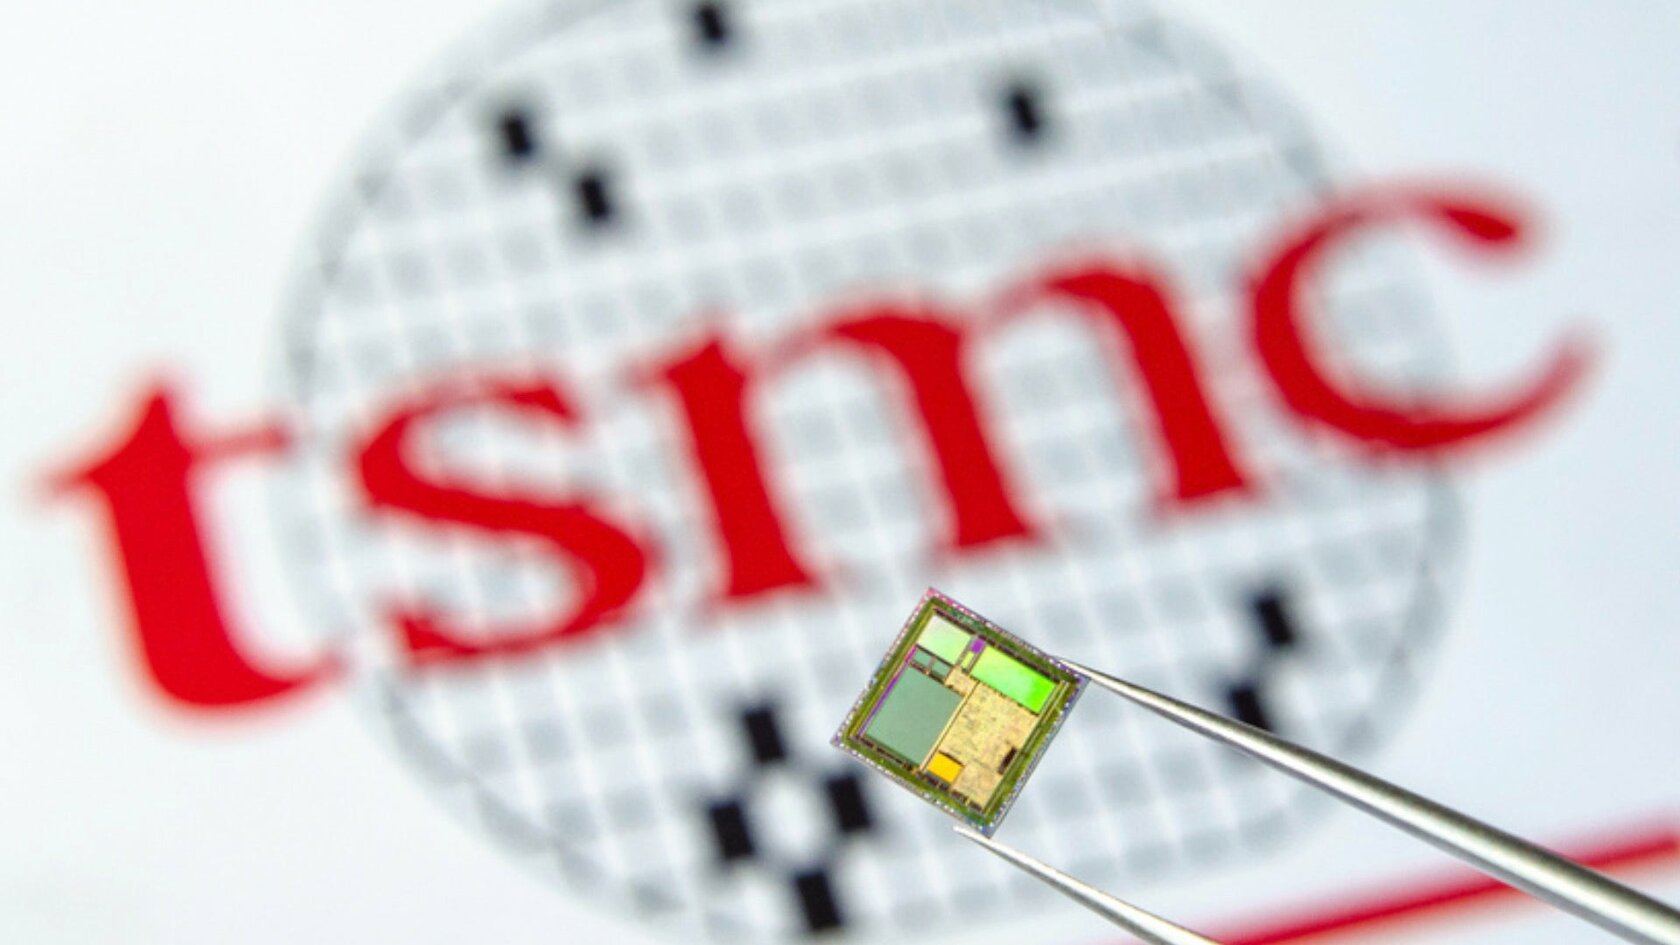 TSMC raises chip production prices, Samsung follows suit. Expect tech price hikes